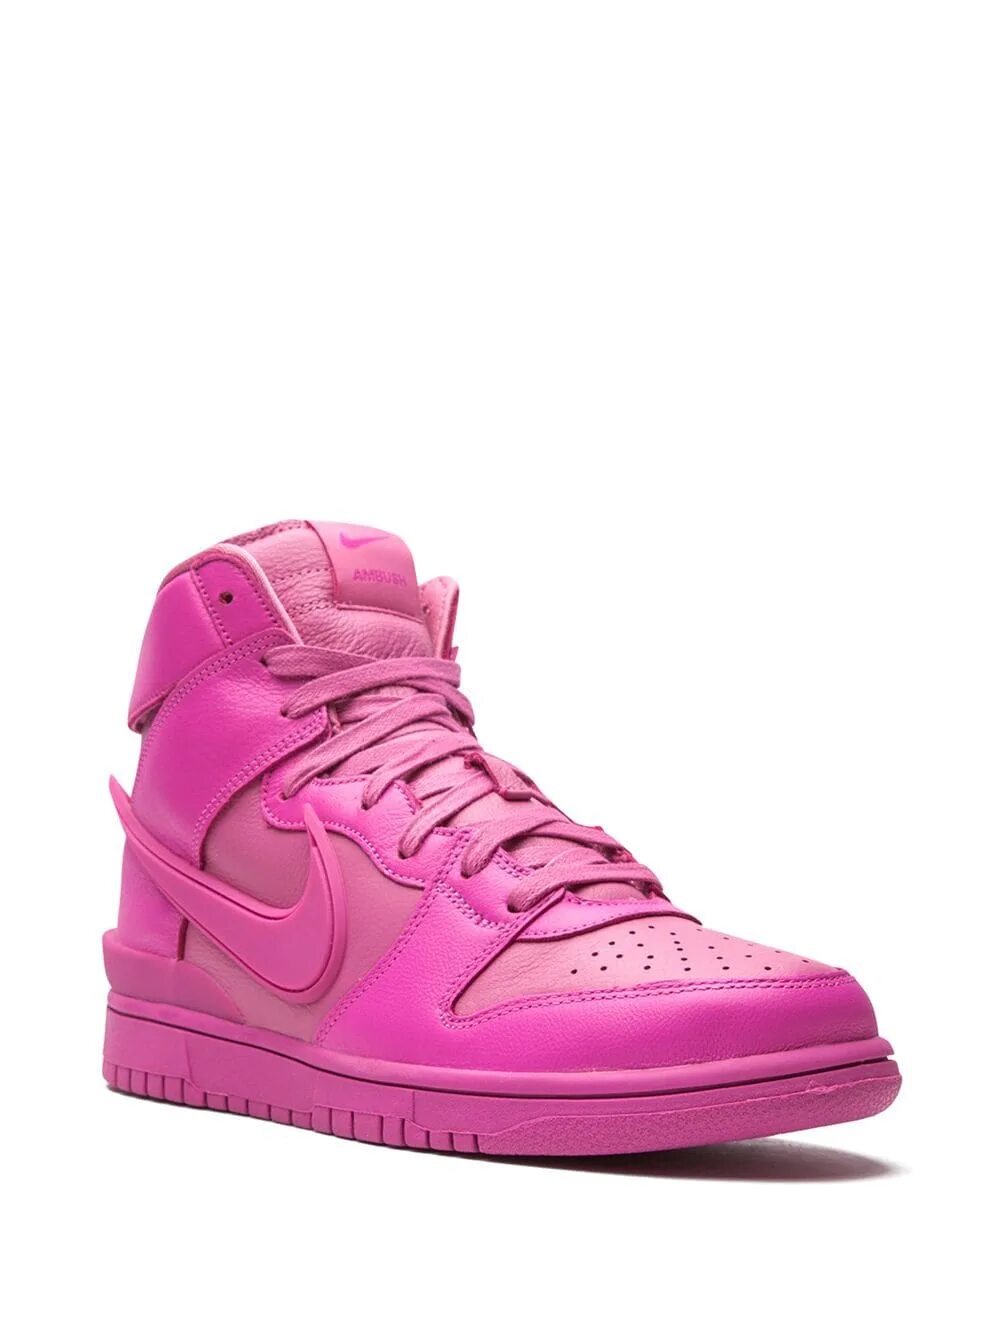 Nike dunk розовые. Nike SB Dunk High Pink. Nike Dunk Pink. Nike Dunk Ambush Pink. Nike Dunk High Pink.